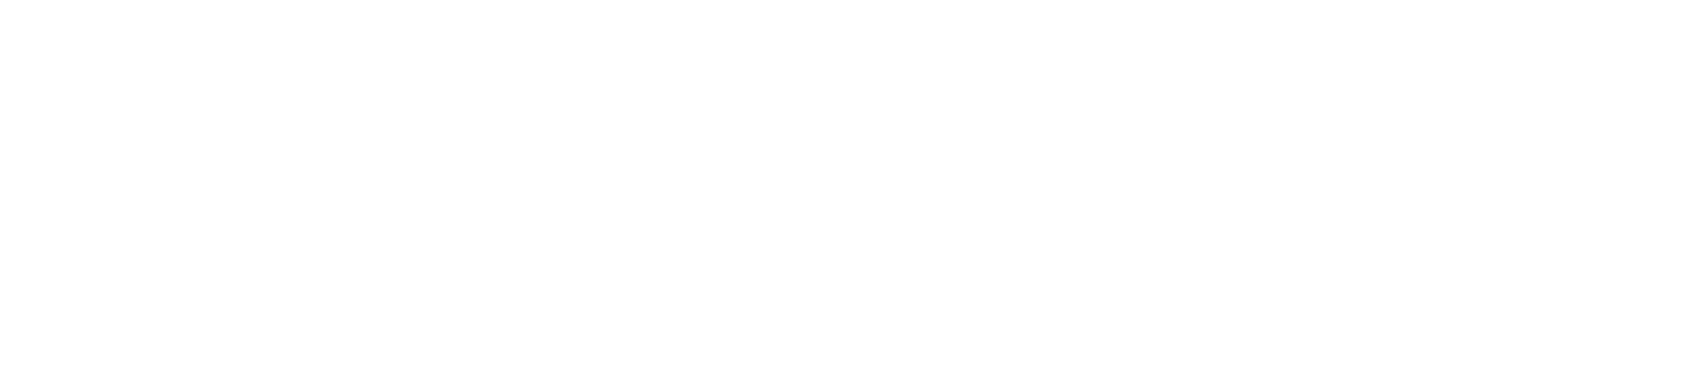 Logo #gkb2020